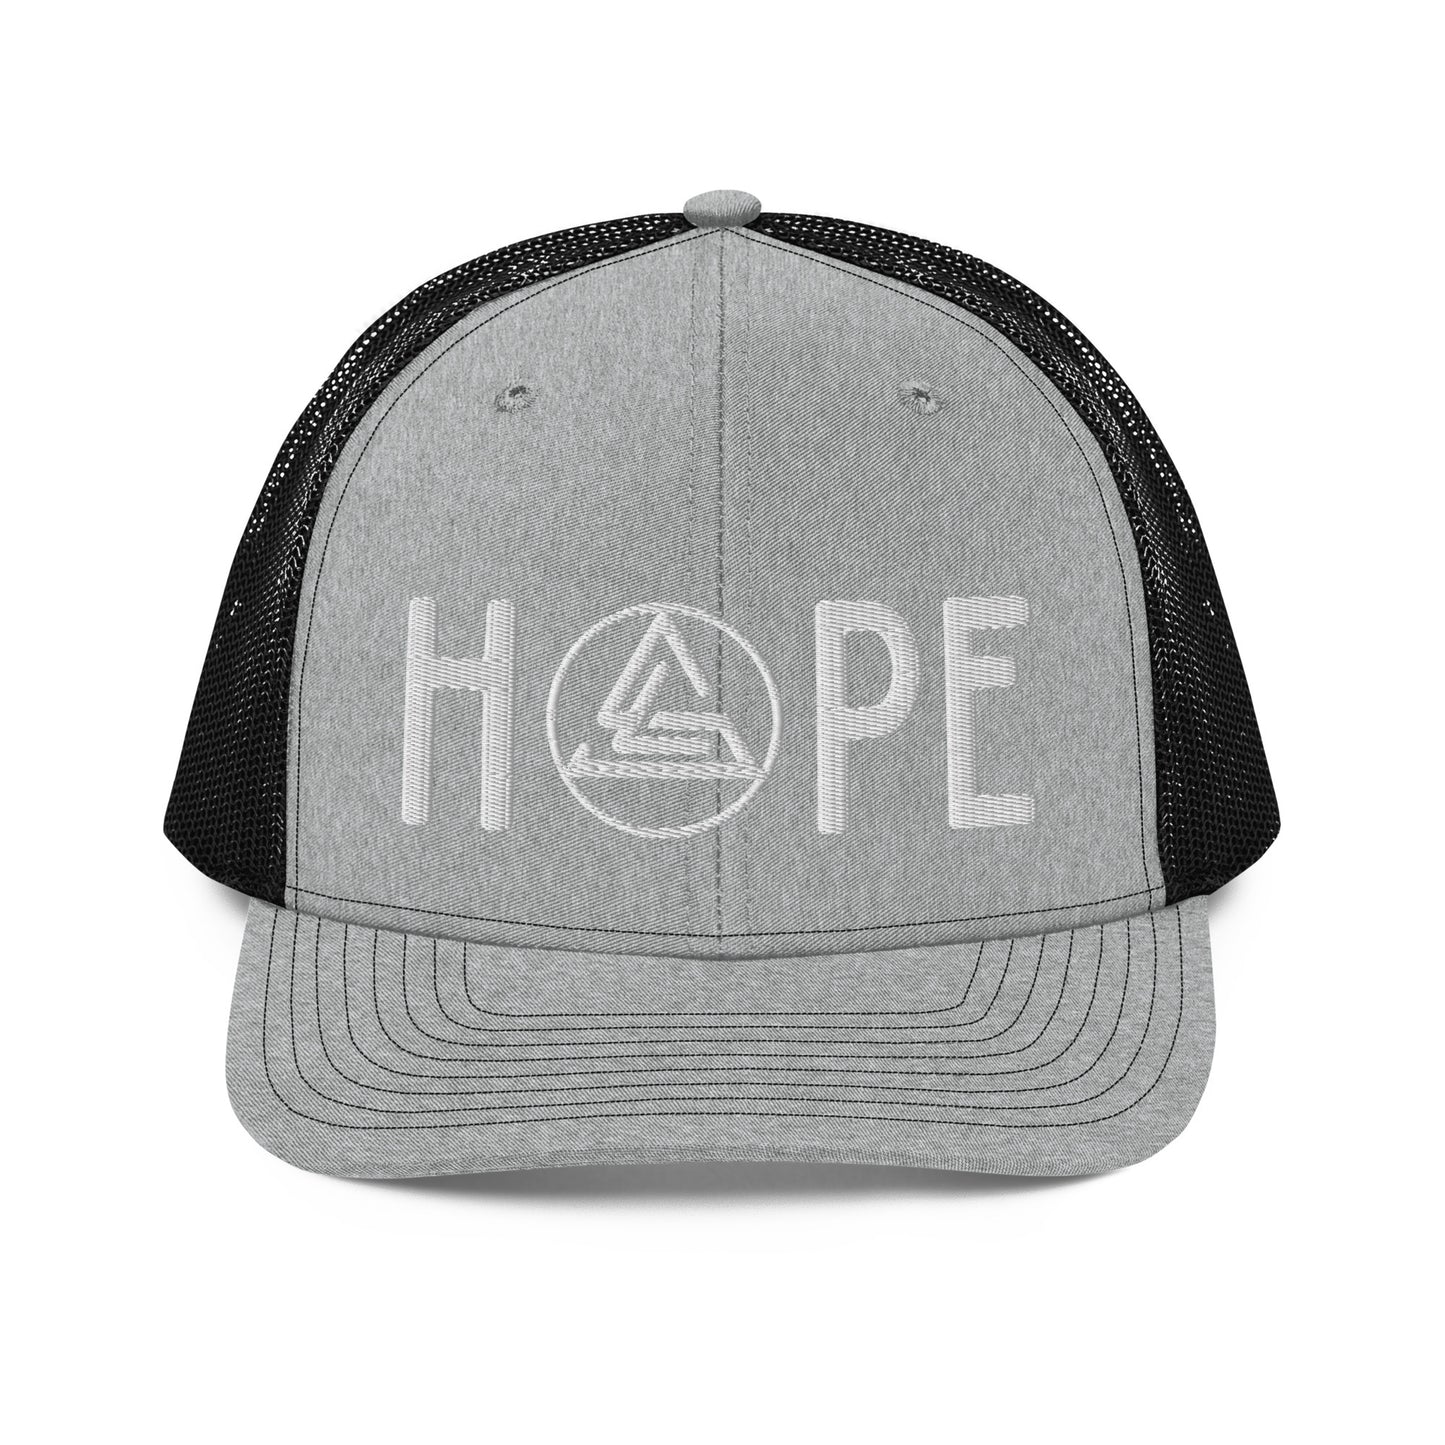 Hope Cap